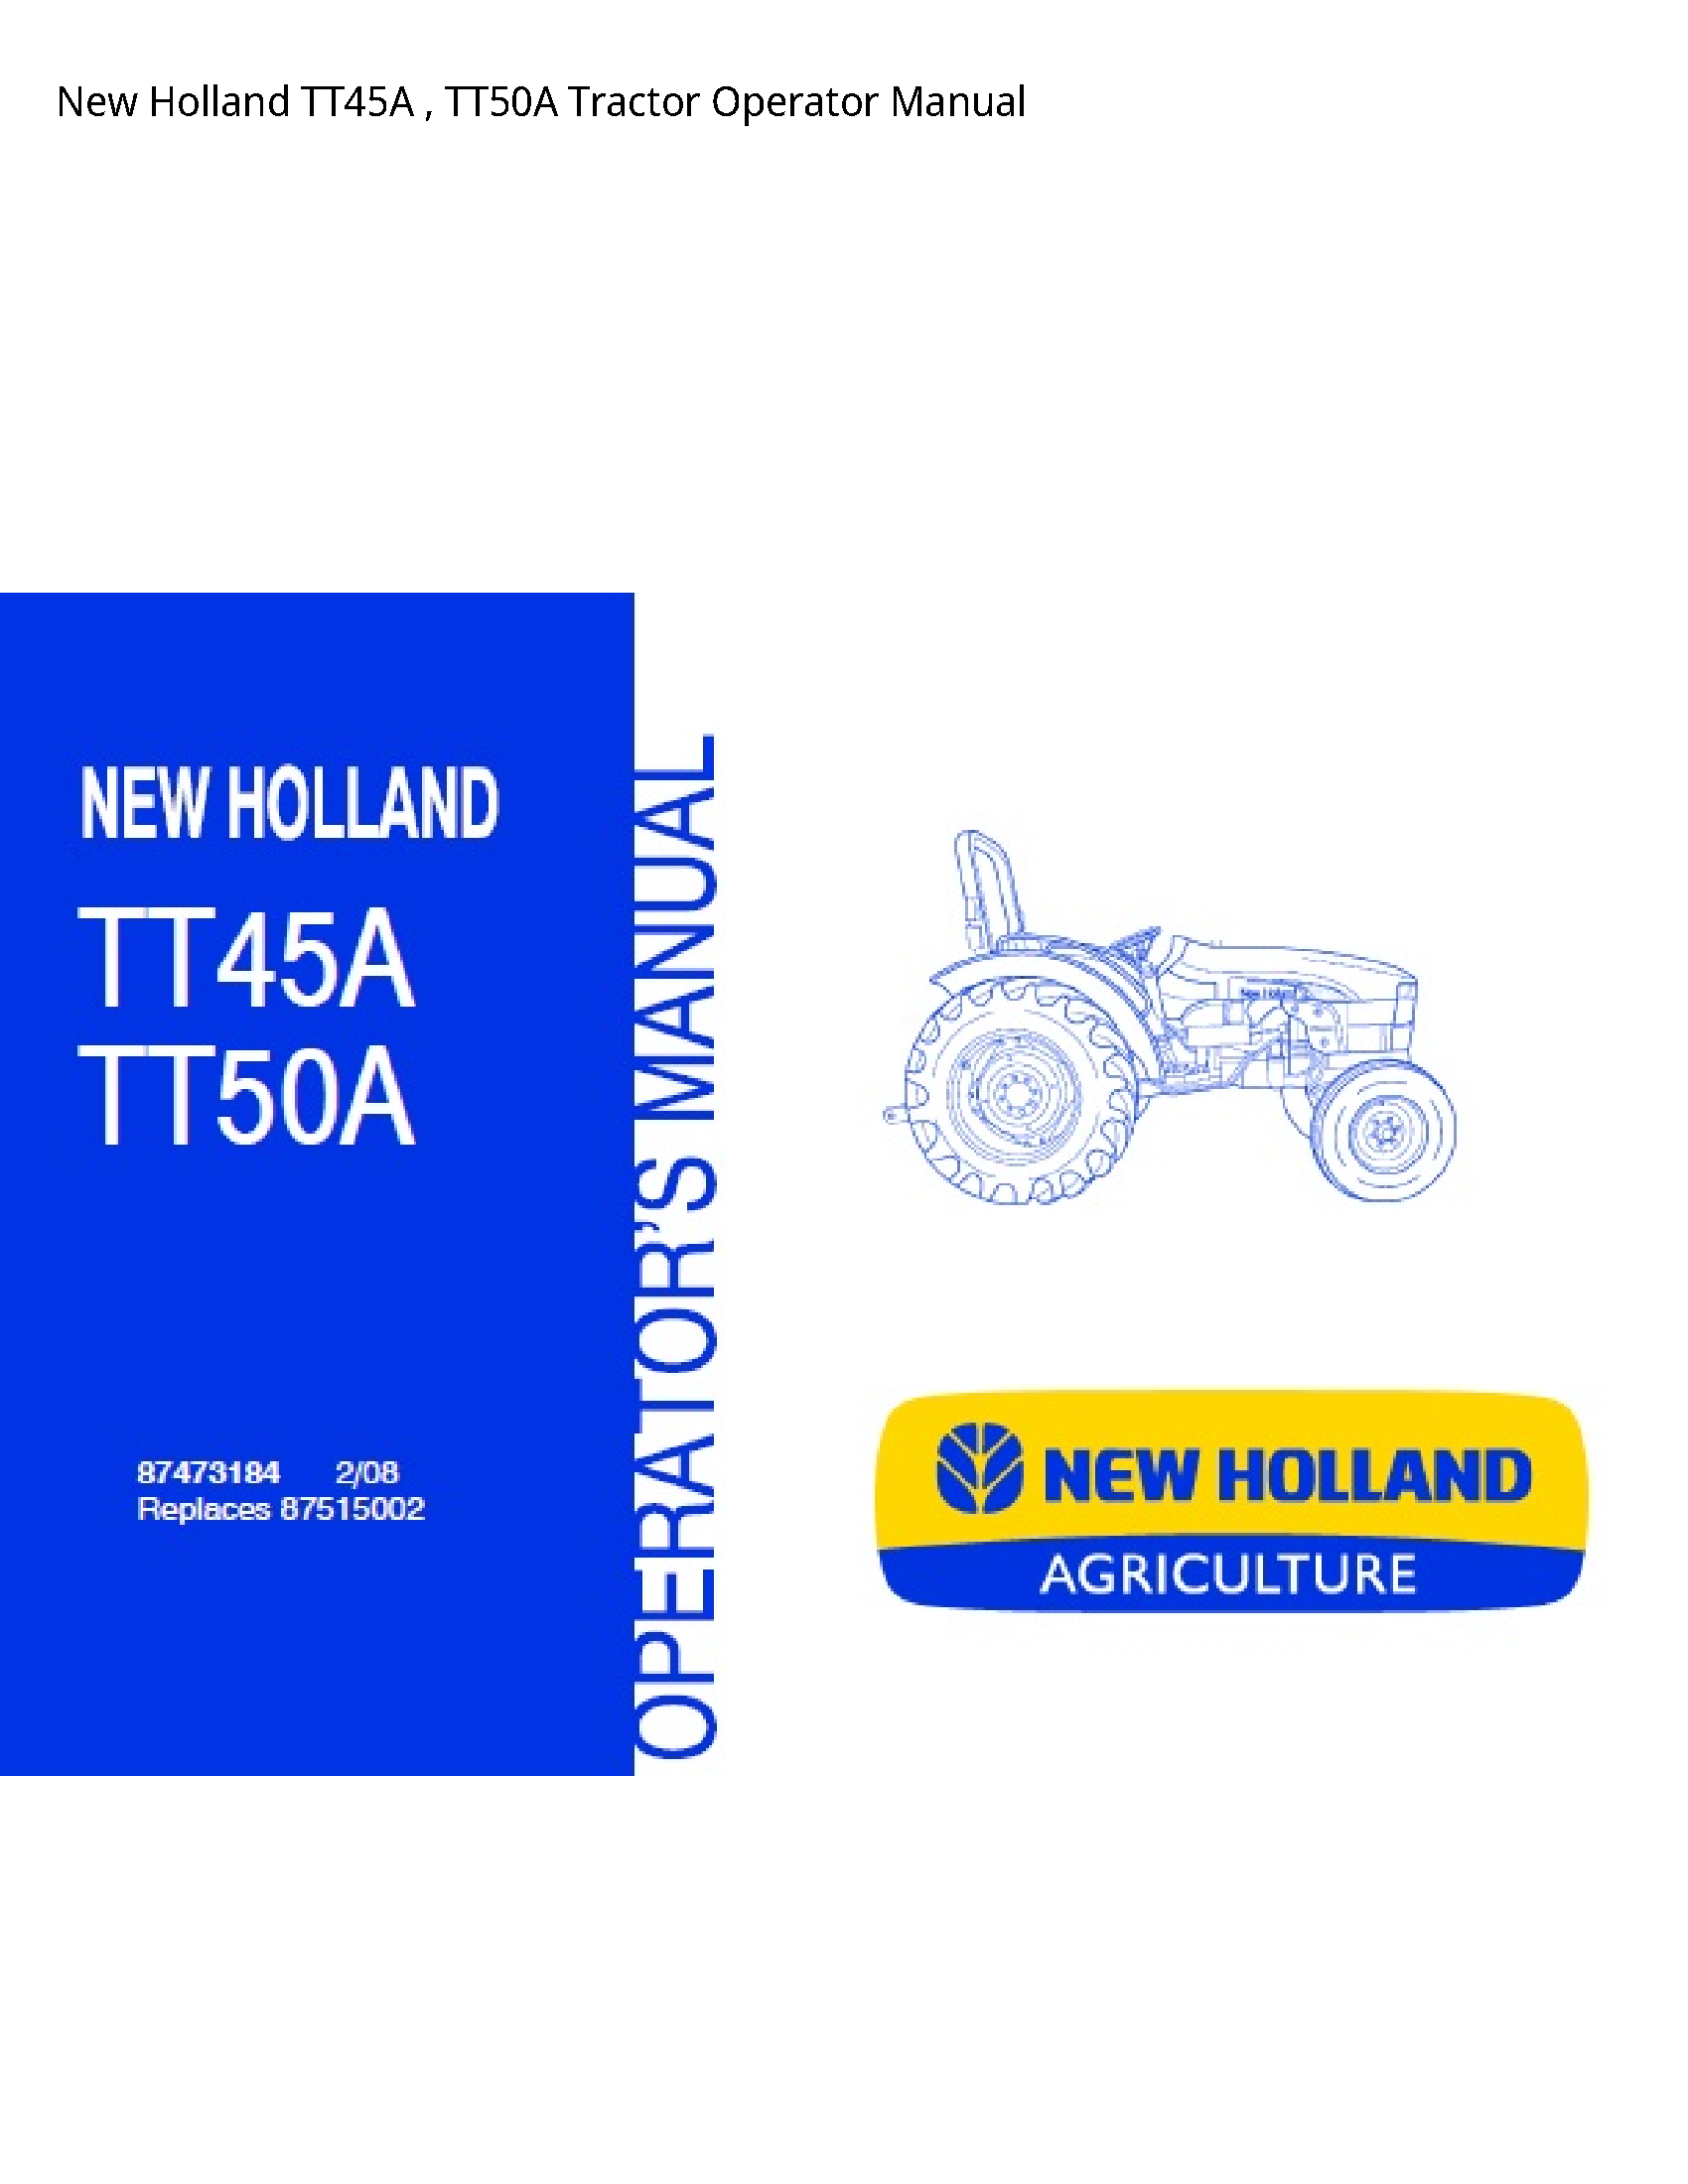 New Holland TT45A Tractor Operator manual